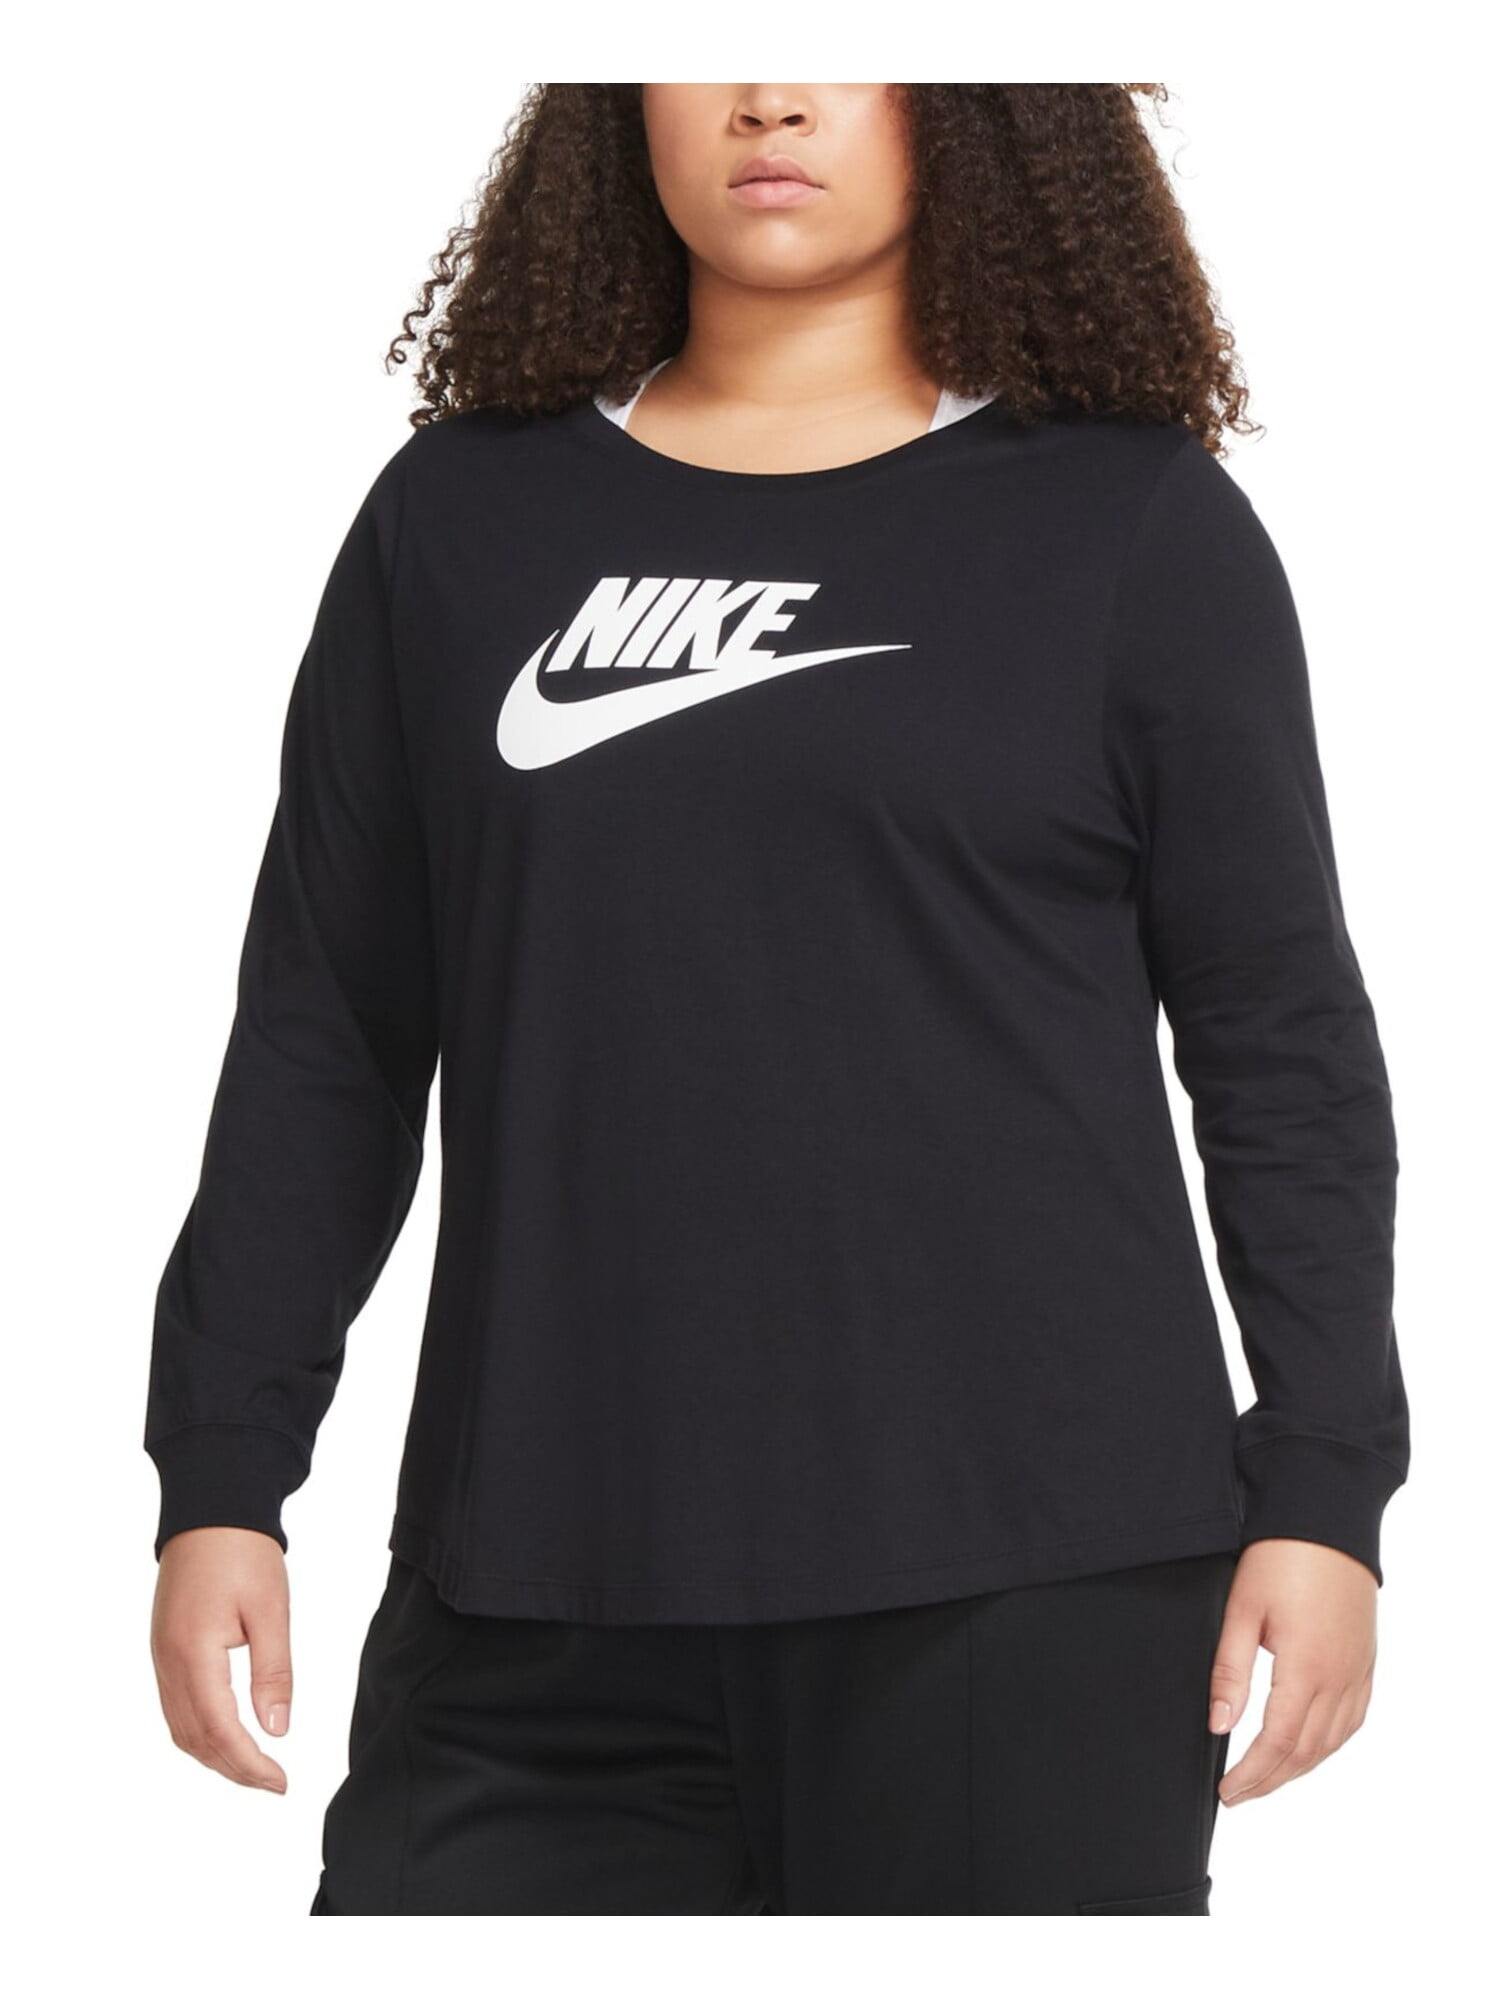 NIKE Womens Black Fleece Logo Graphic Active Wear Sweatshirt Plus 2X ...